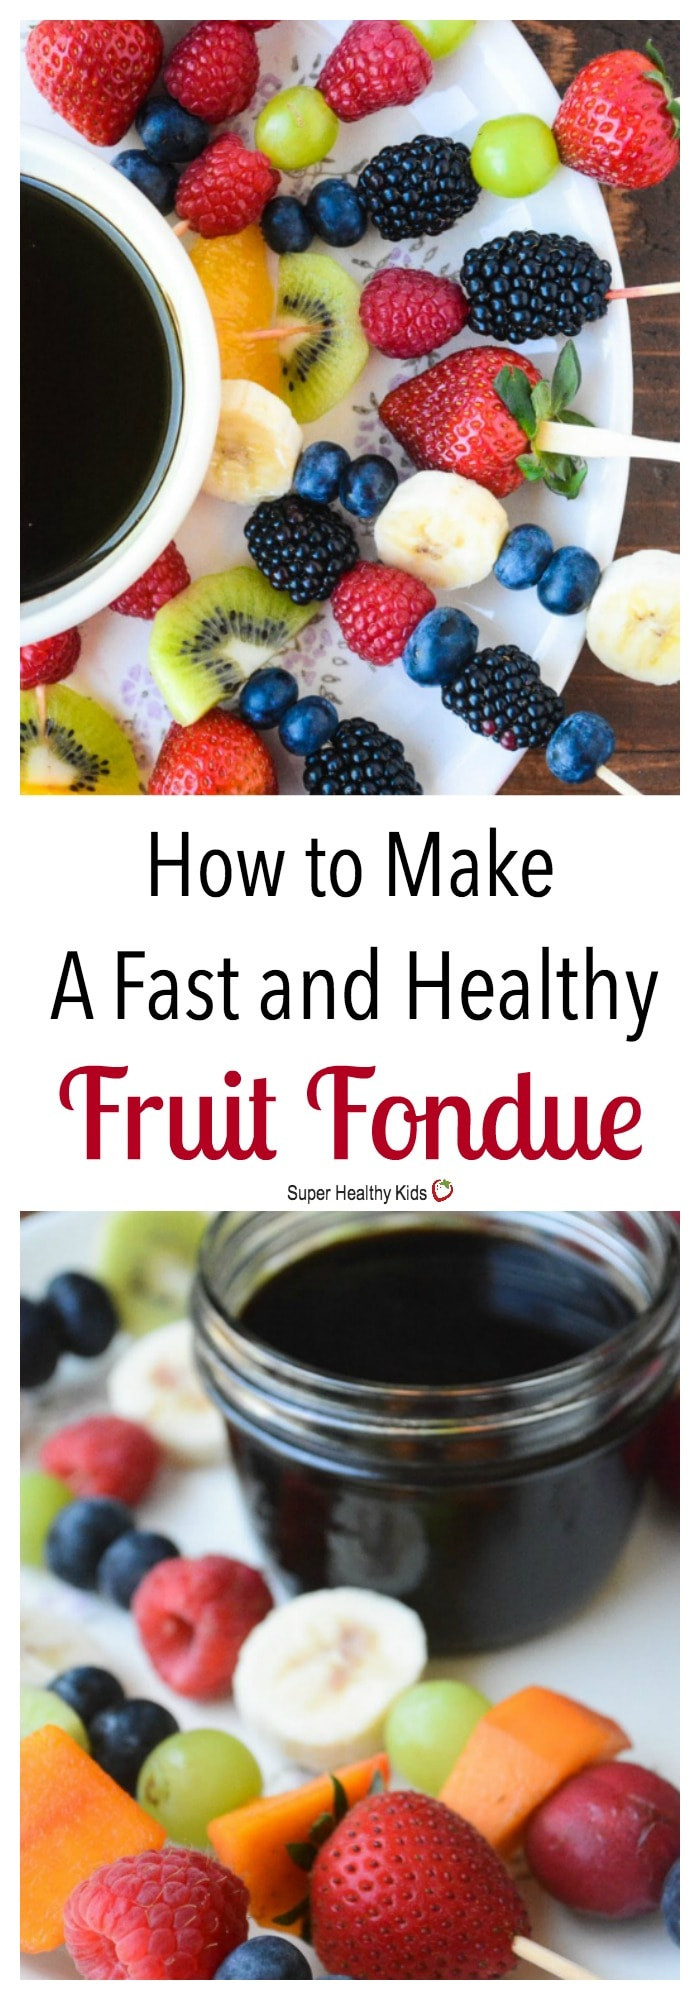 Fondue Recipes For Kids
 How to Make a Fast and Healthy Fruit Fondue